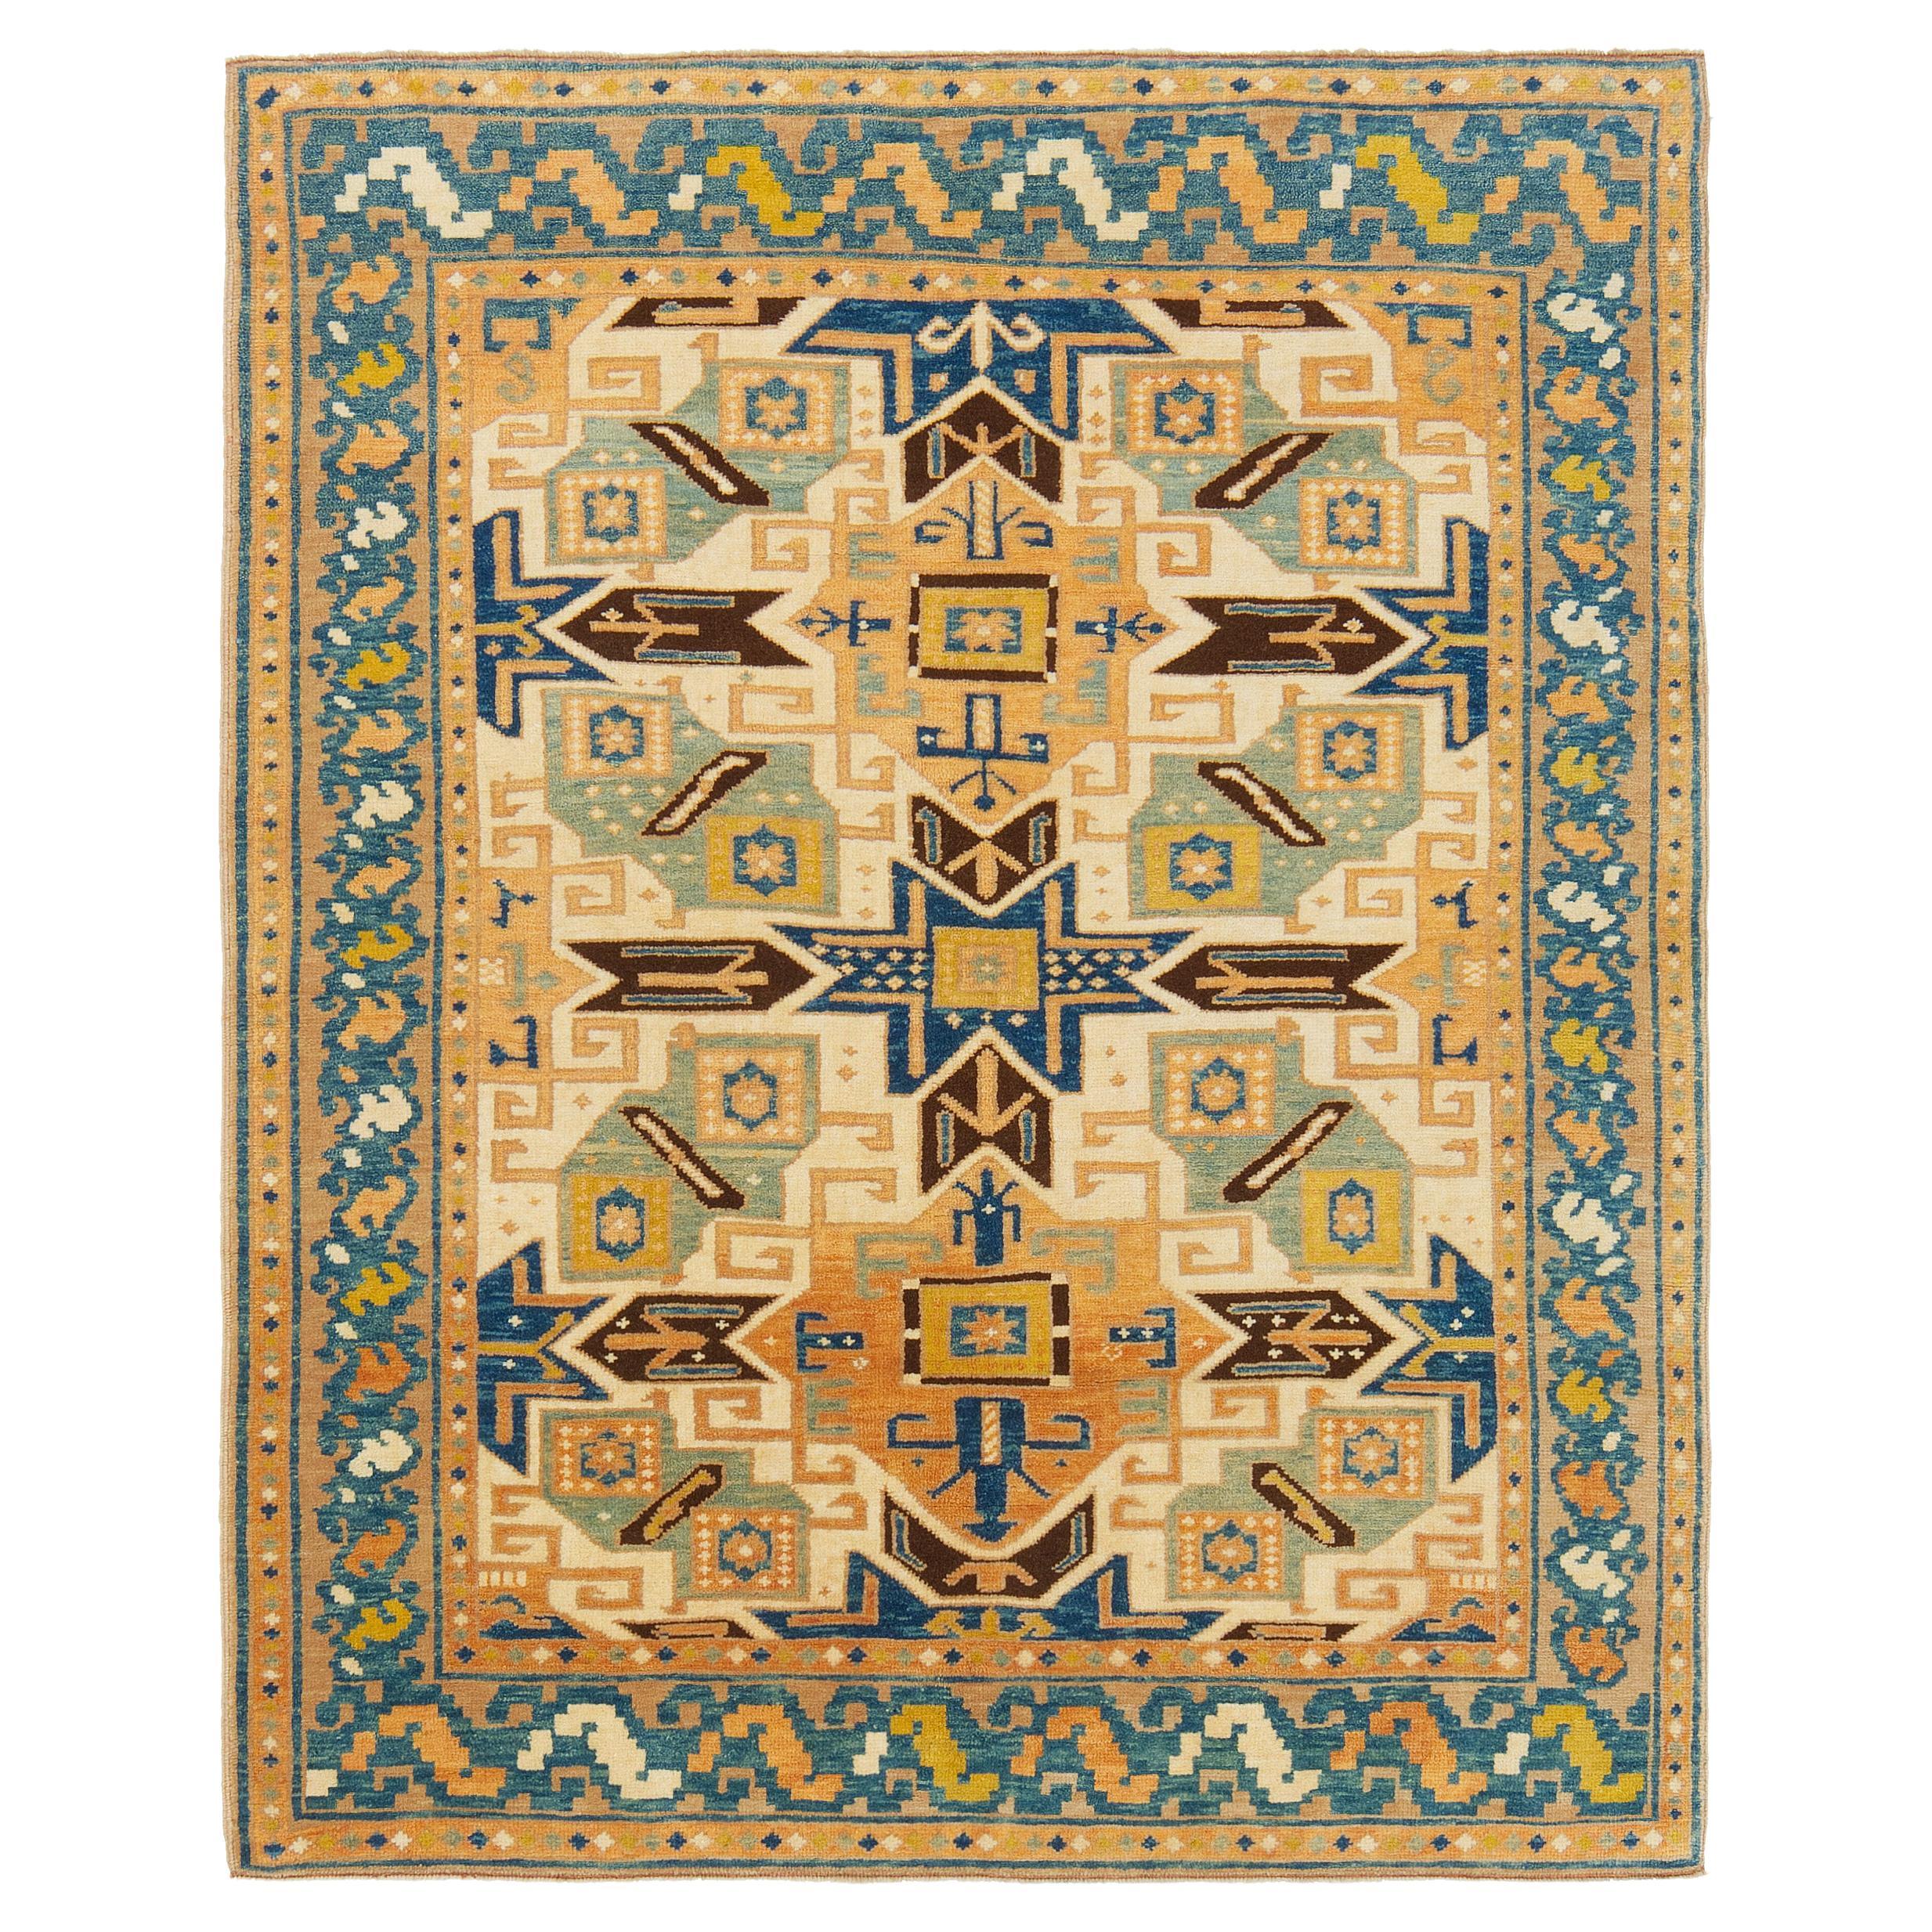 Ararat Rugs Star Kazak Rug Caucasian 19th C. Antique Revival Carpet Natural Dyed